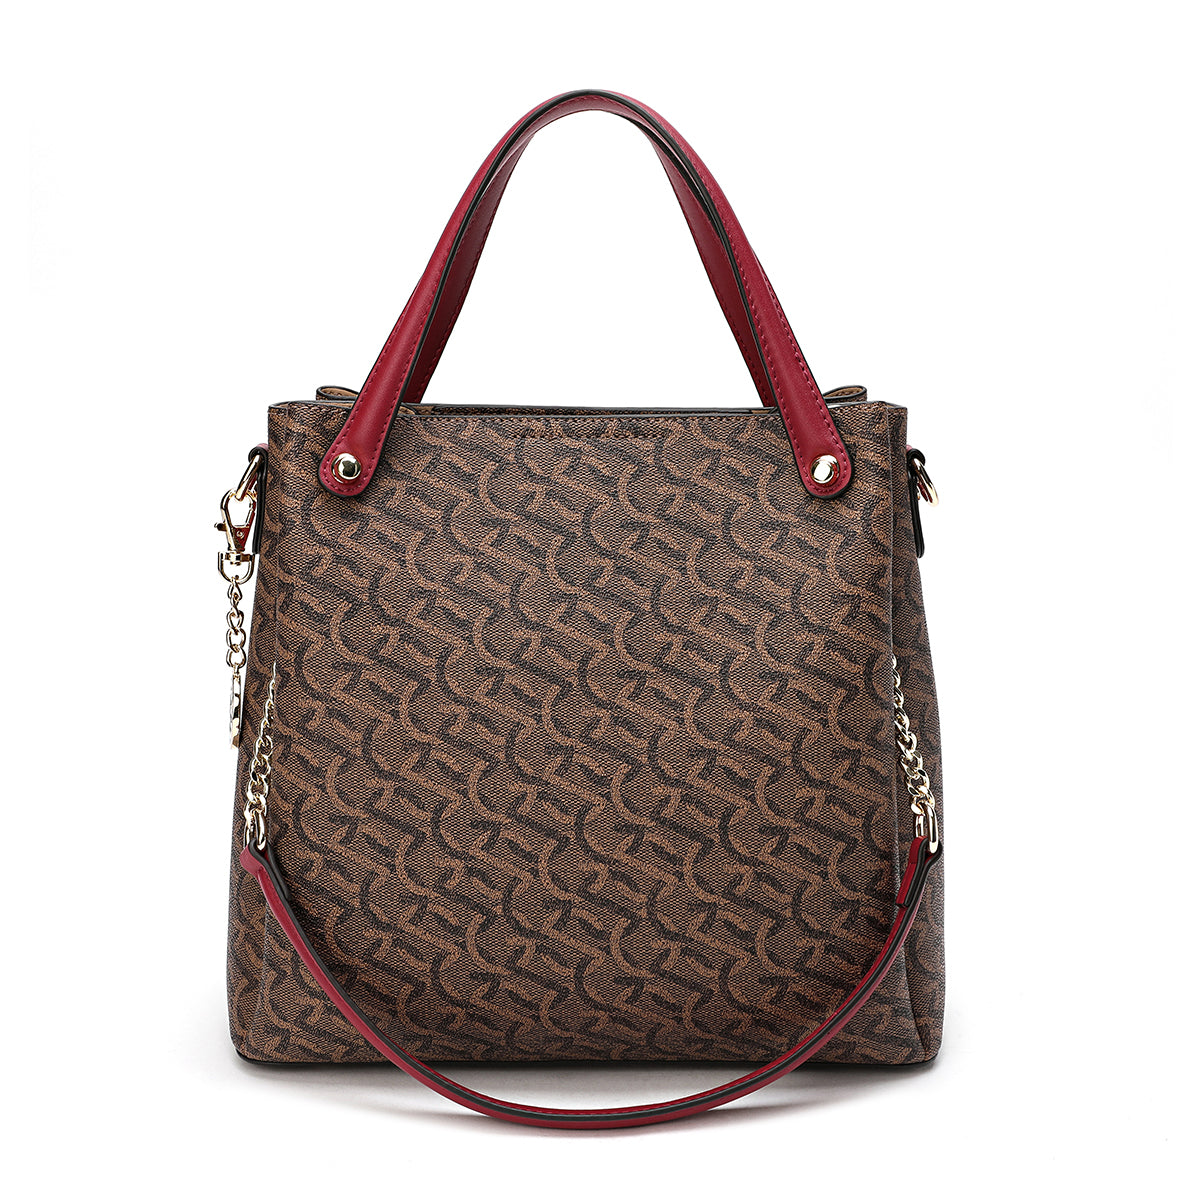 Handbag designed with a spacious and flexible area, 28 cm wide